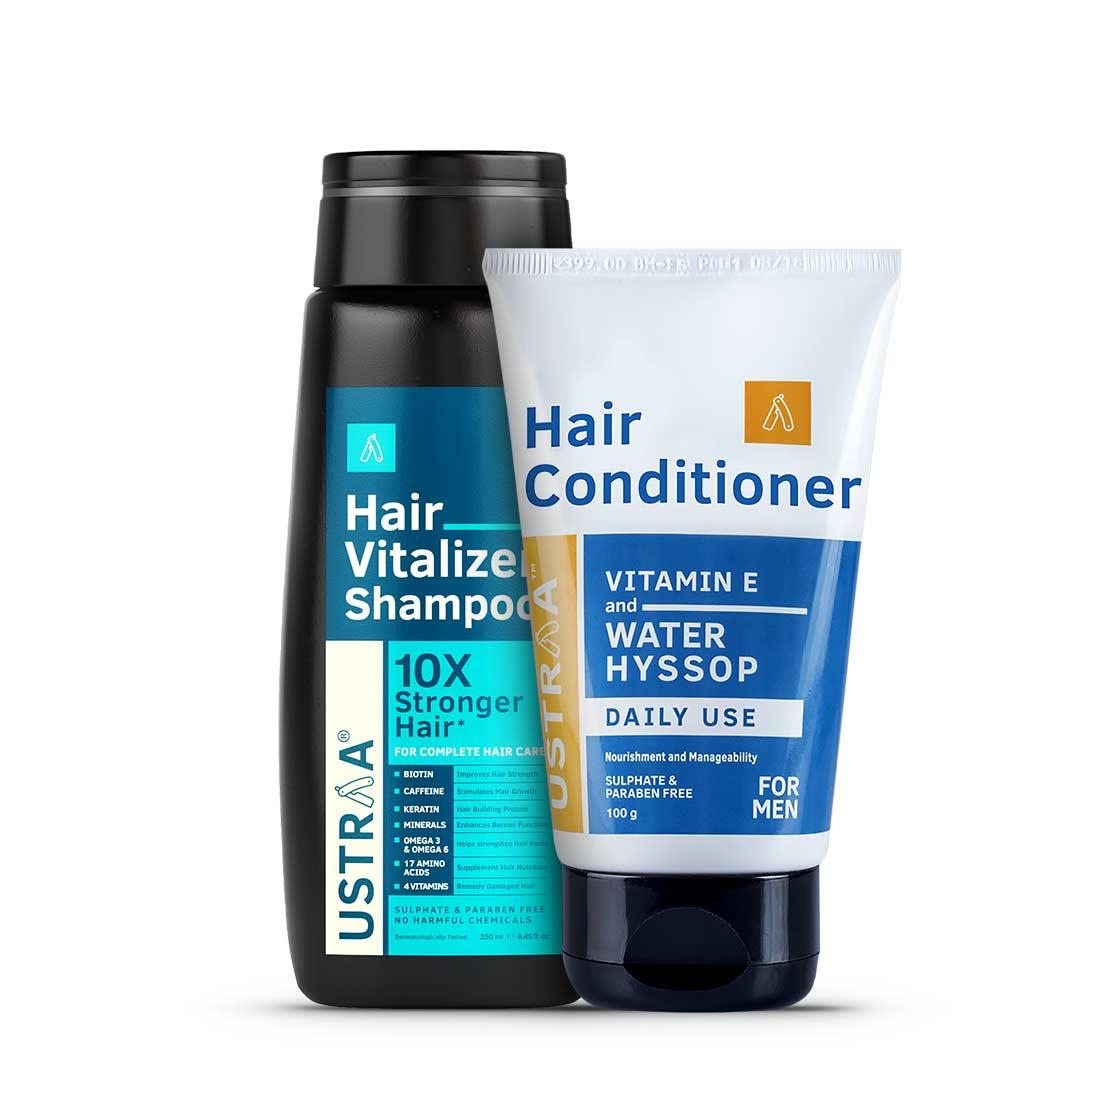 Hair Vitalizer Shampoo & Daily Use Hair Conditioner